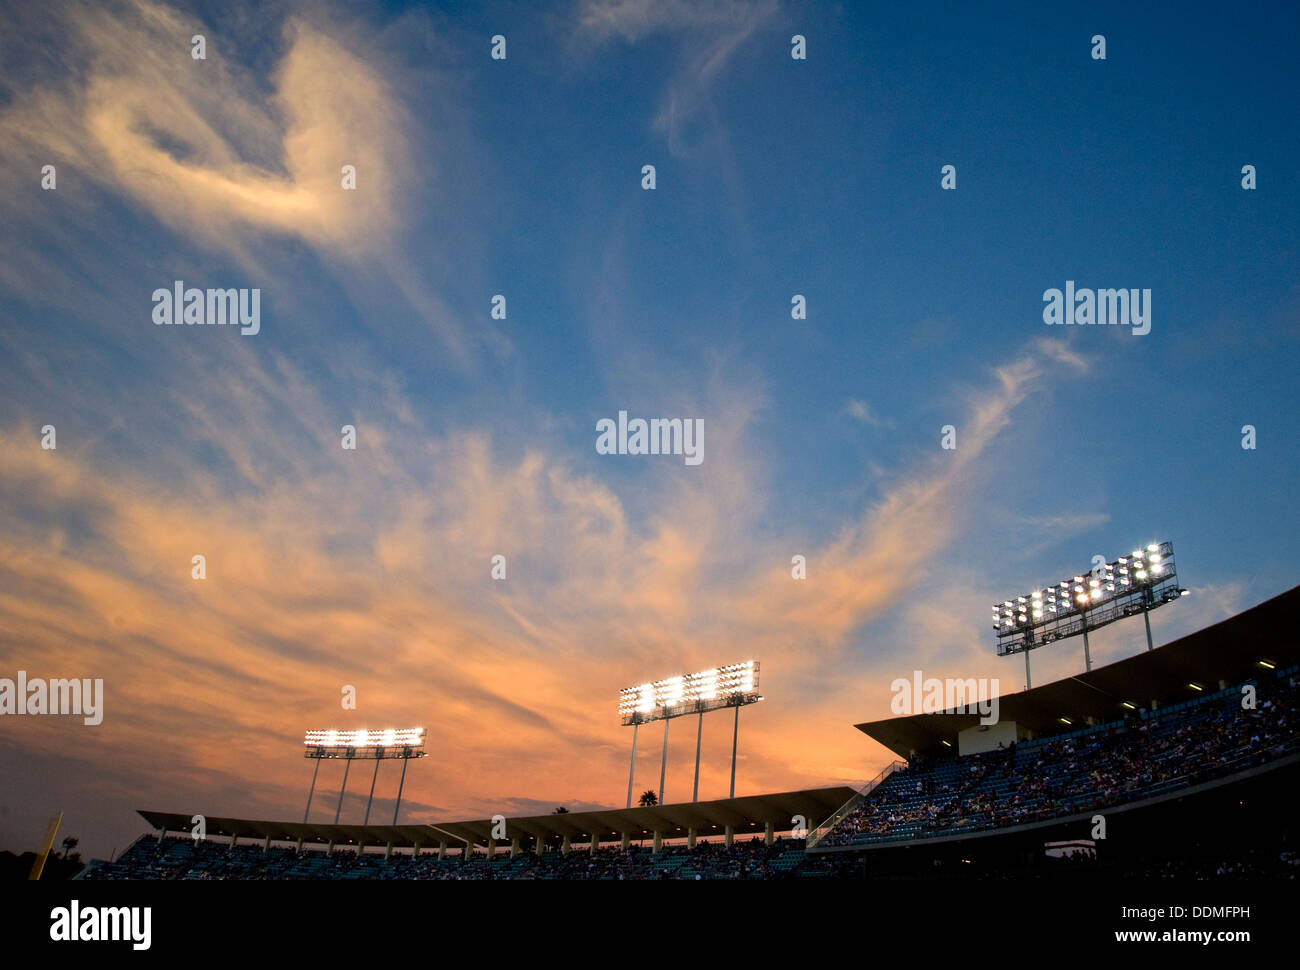 Lights at a stadium at sunset Stock Photo